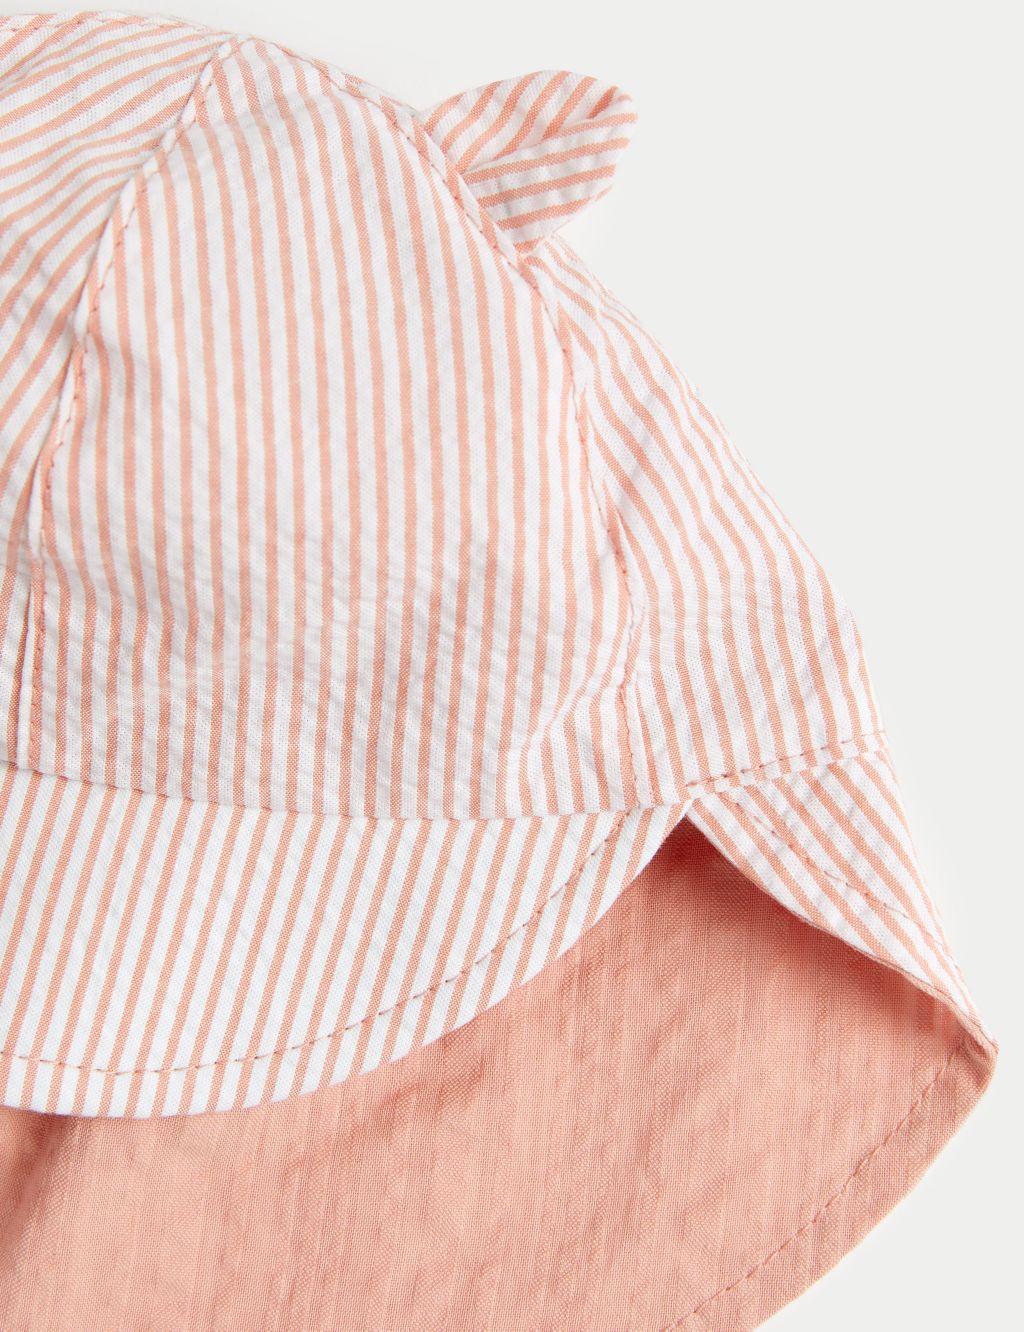 Kids' Pure Cotton Reversible Sun Hat (0-1 Yrs) image 3